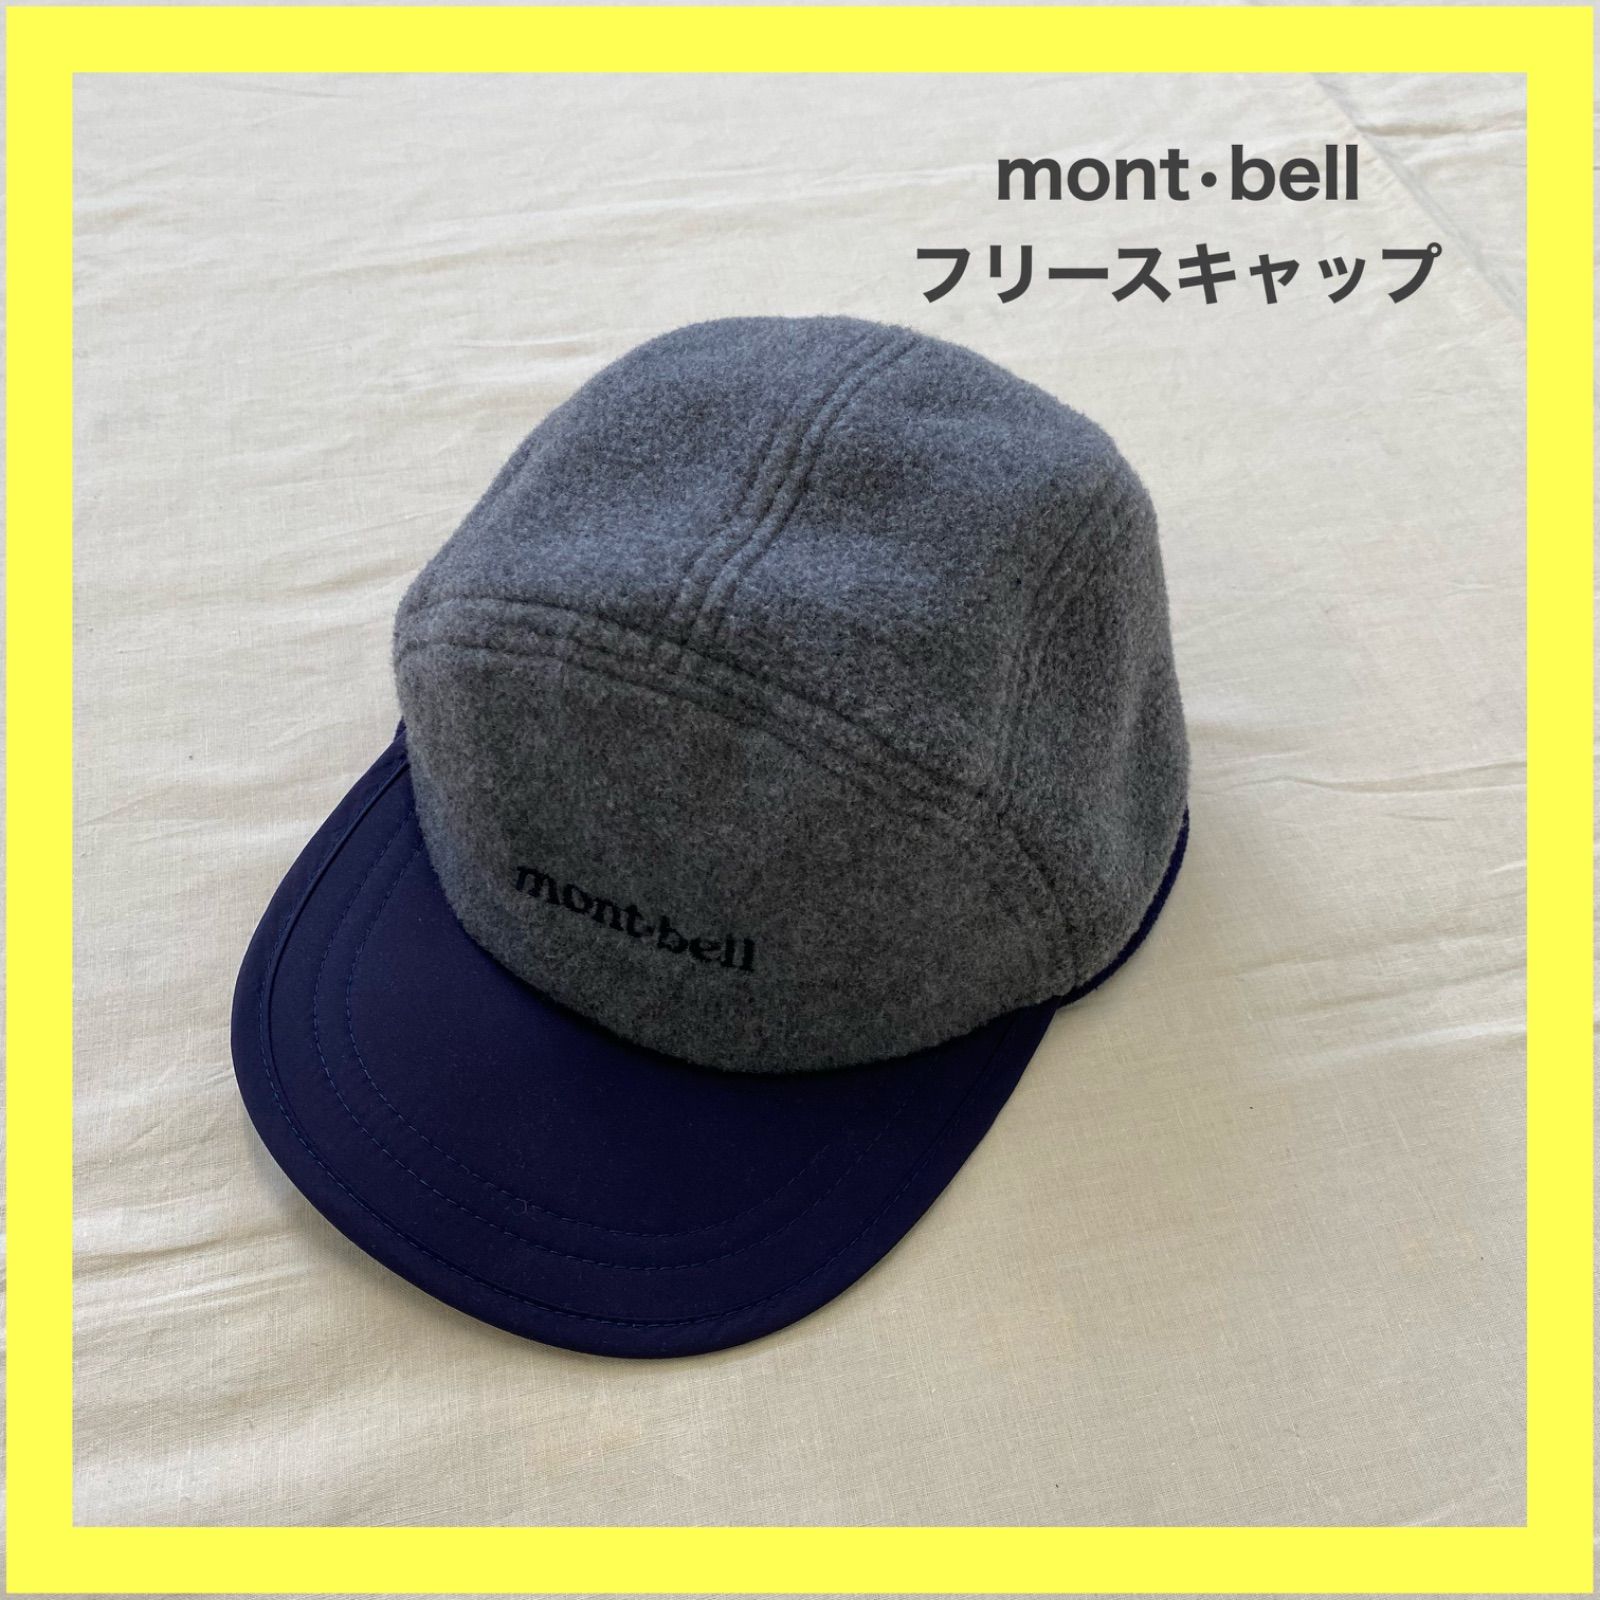 montbell モンベル フリースキャップ キャップ 帽子 L - メルカリ